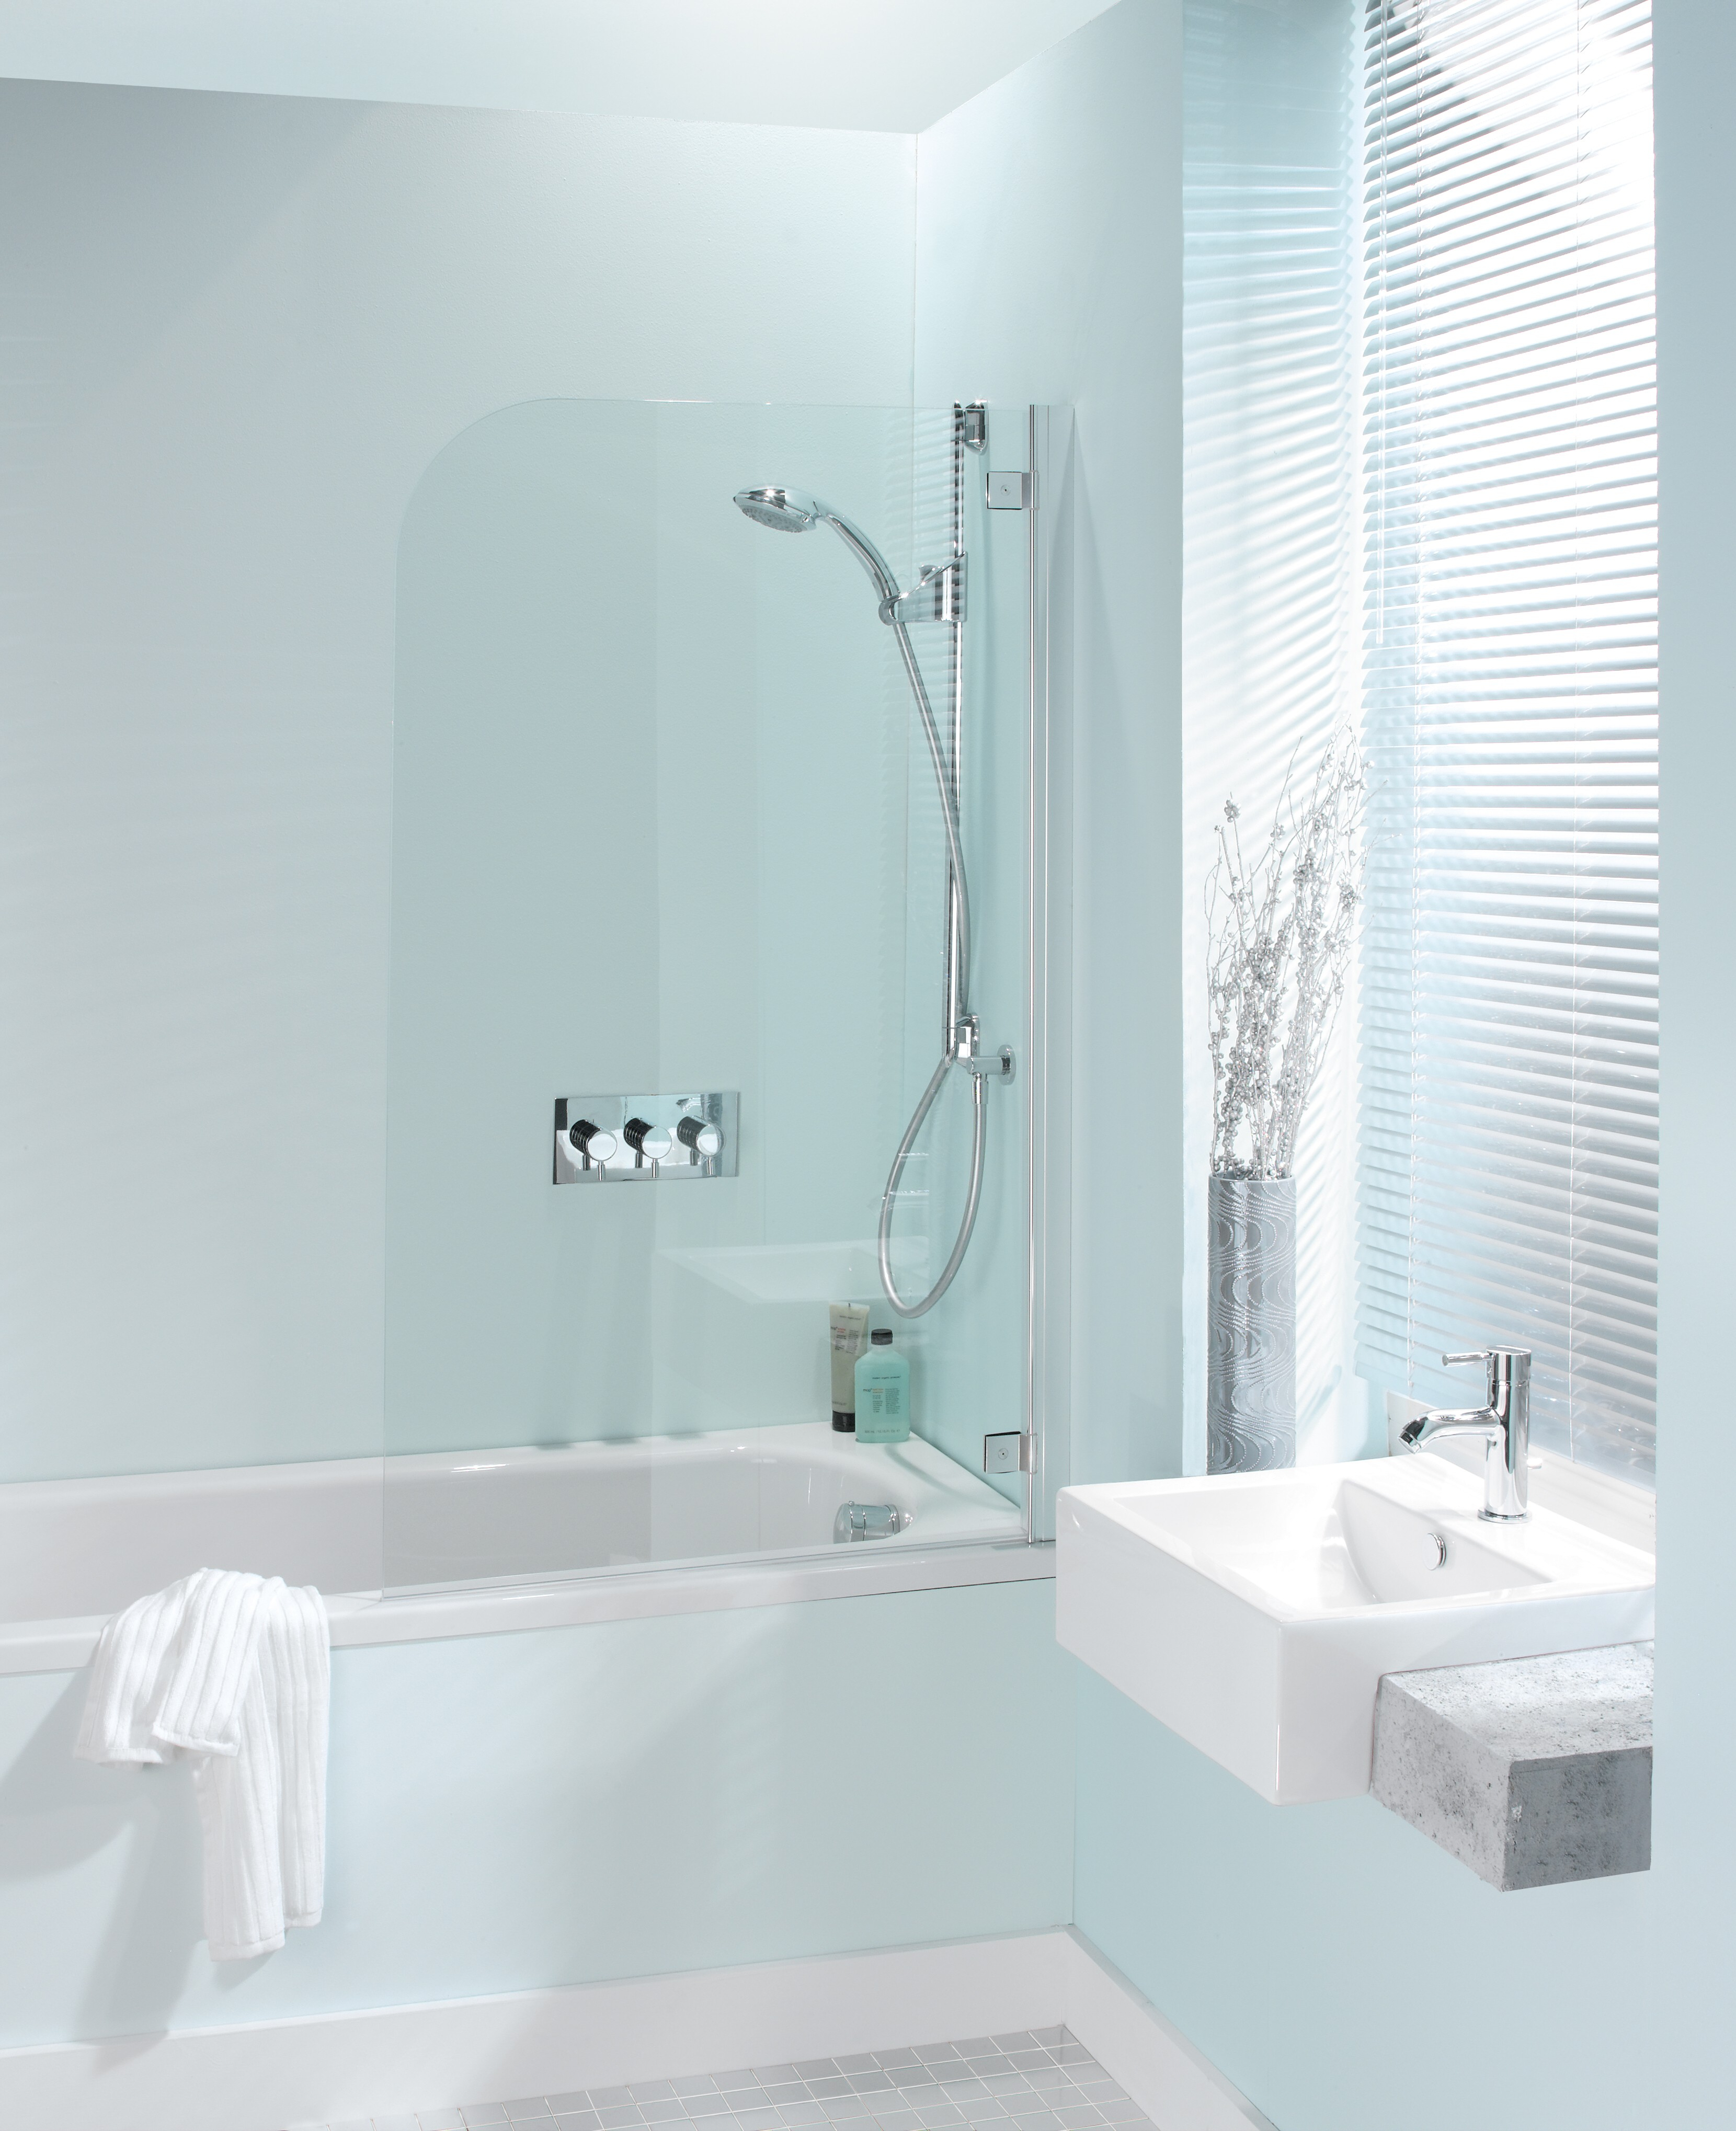 Bathtub With Half Glass Wall Glass Designs throughout dimensions 3320 X 4076